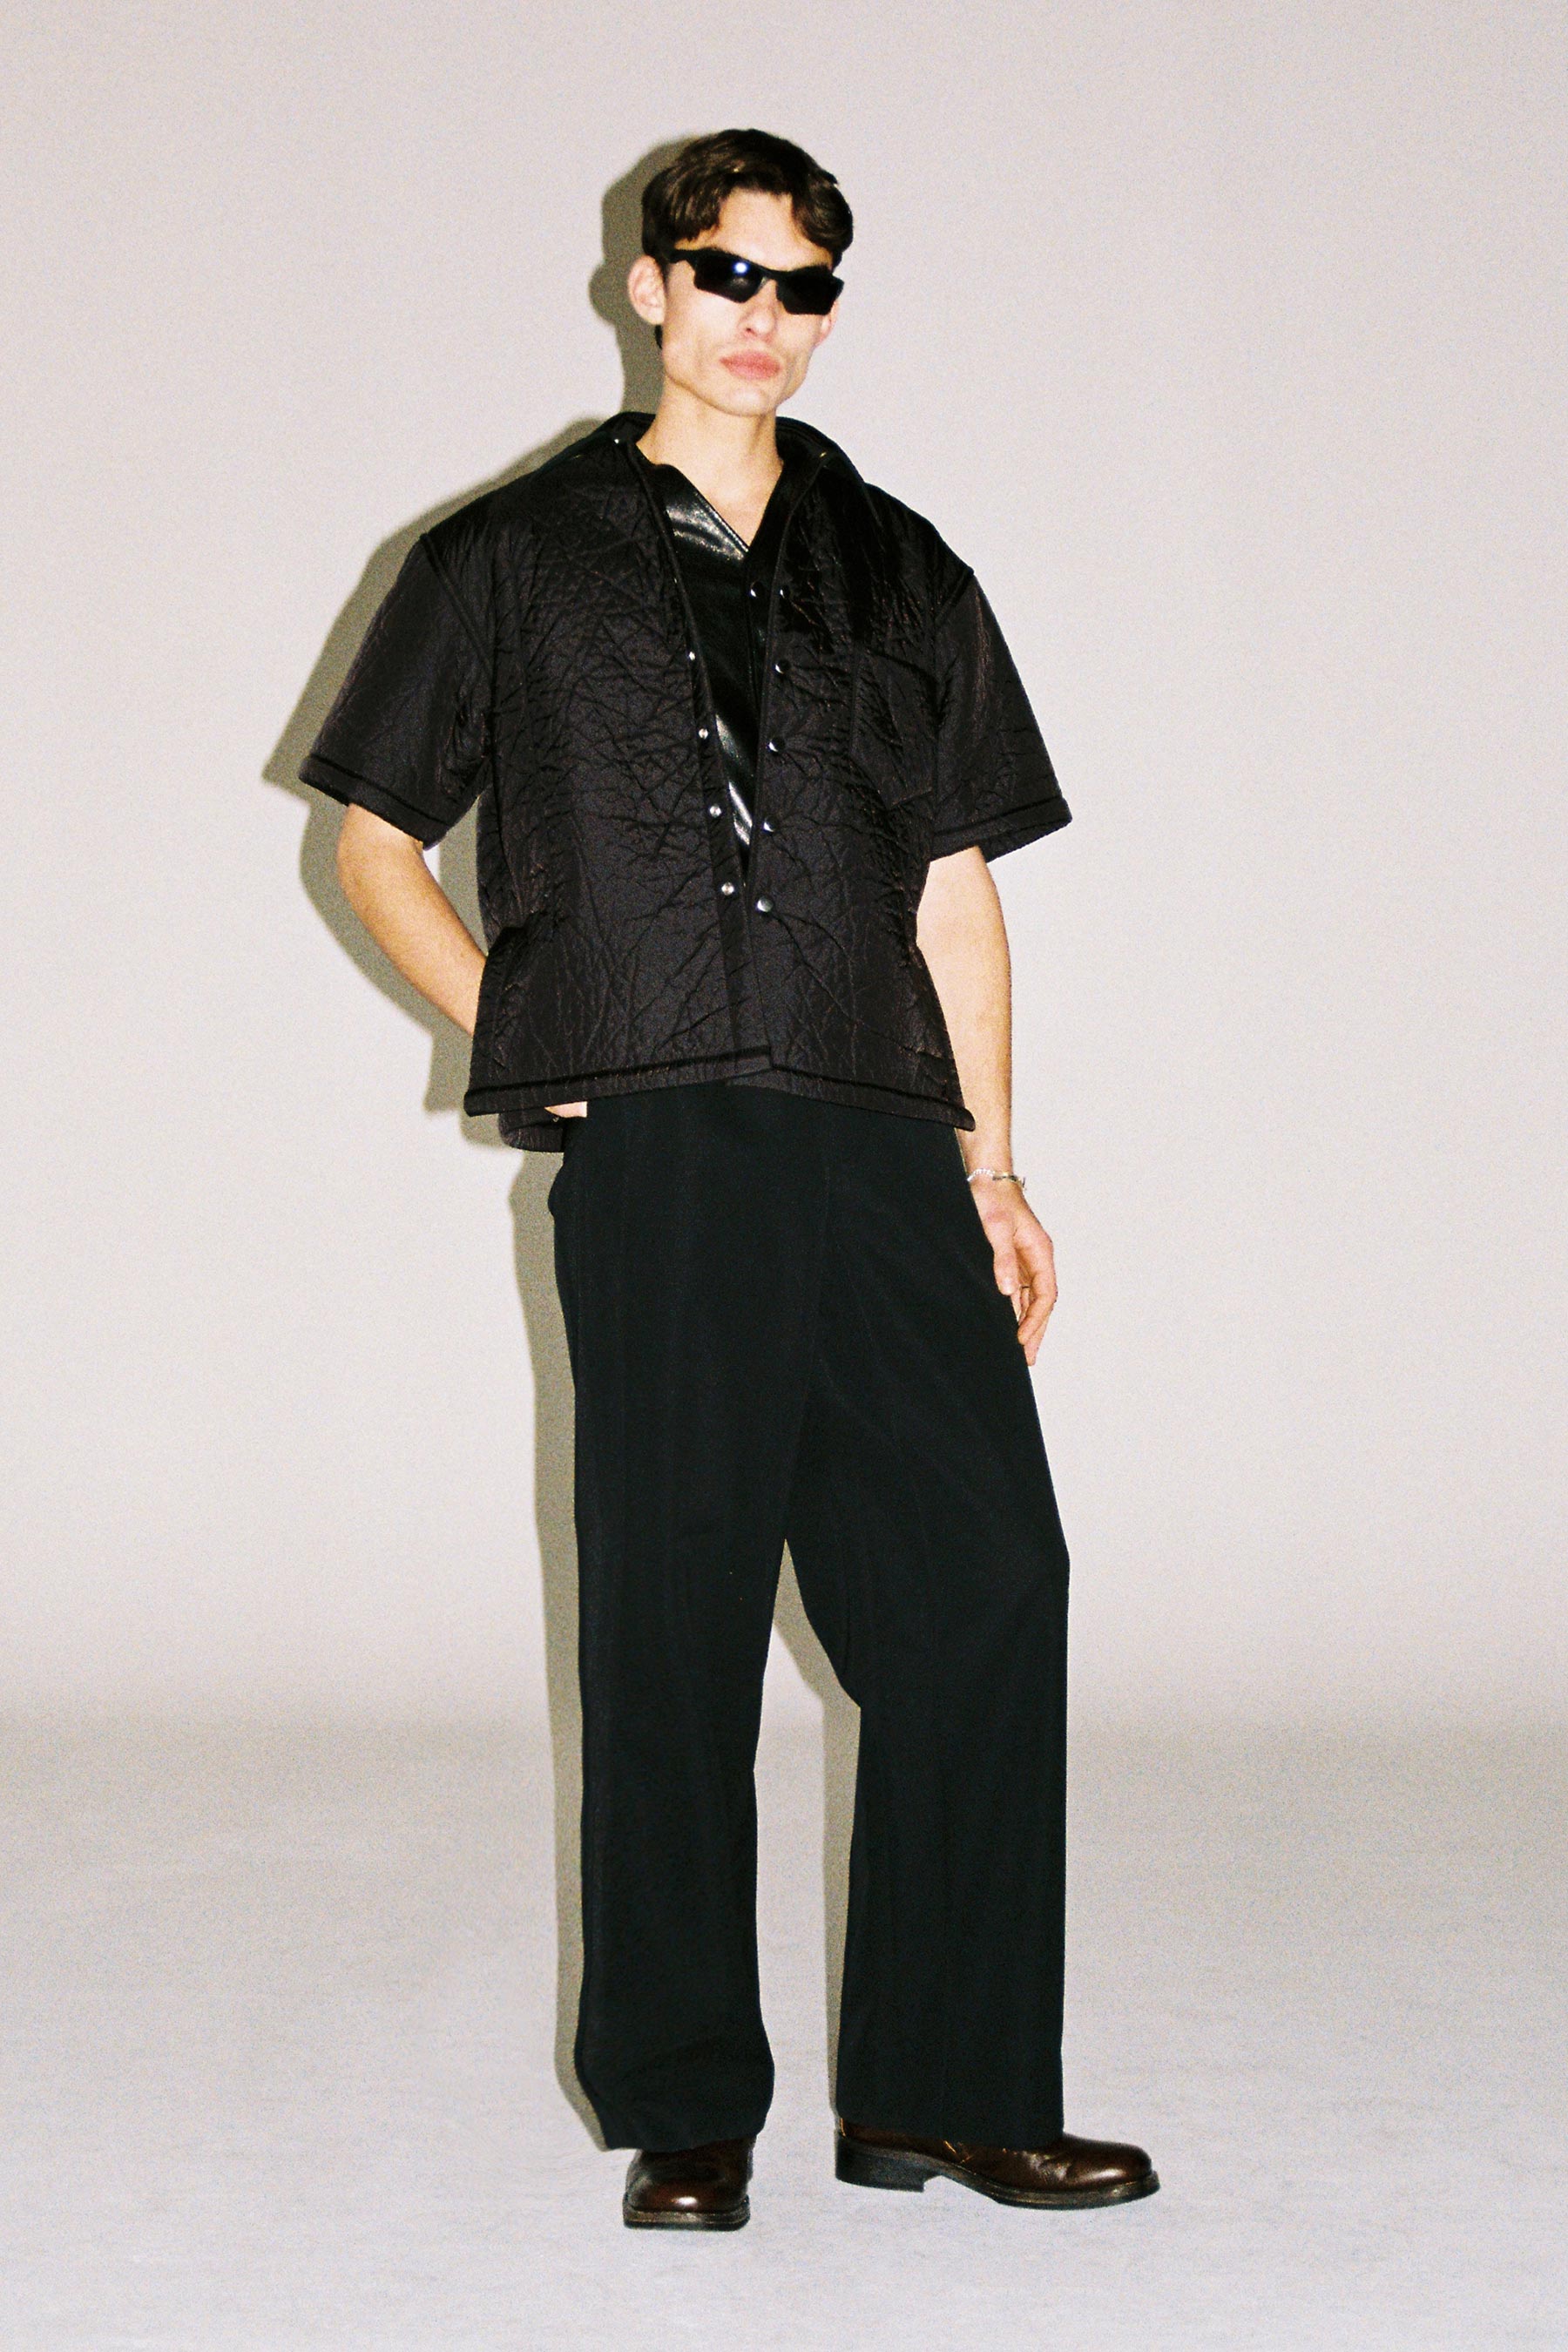 Black Nylon Polyester Padded Cuboid Overshirt (Full Lining)